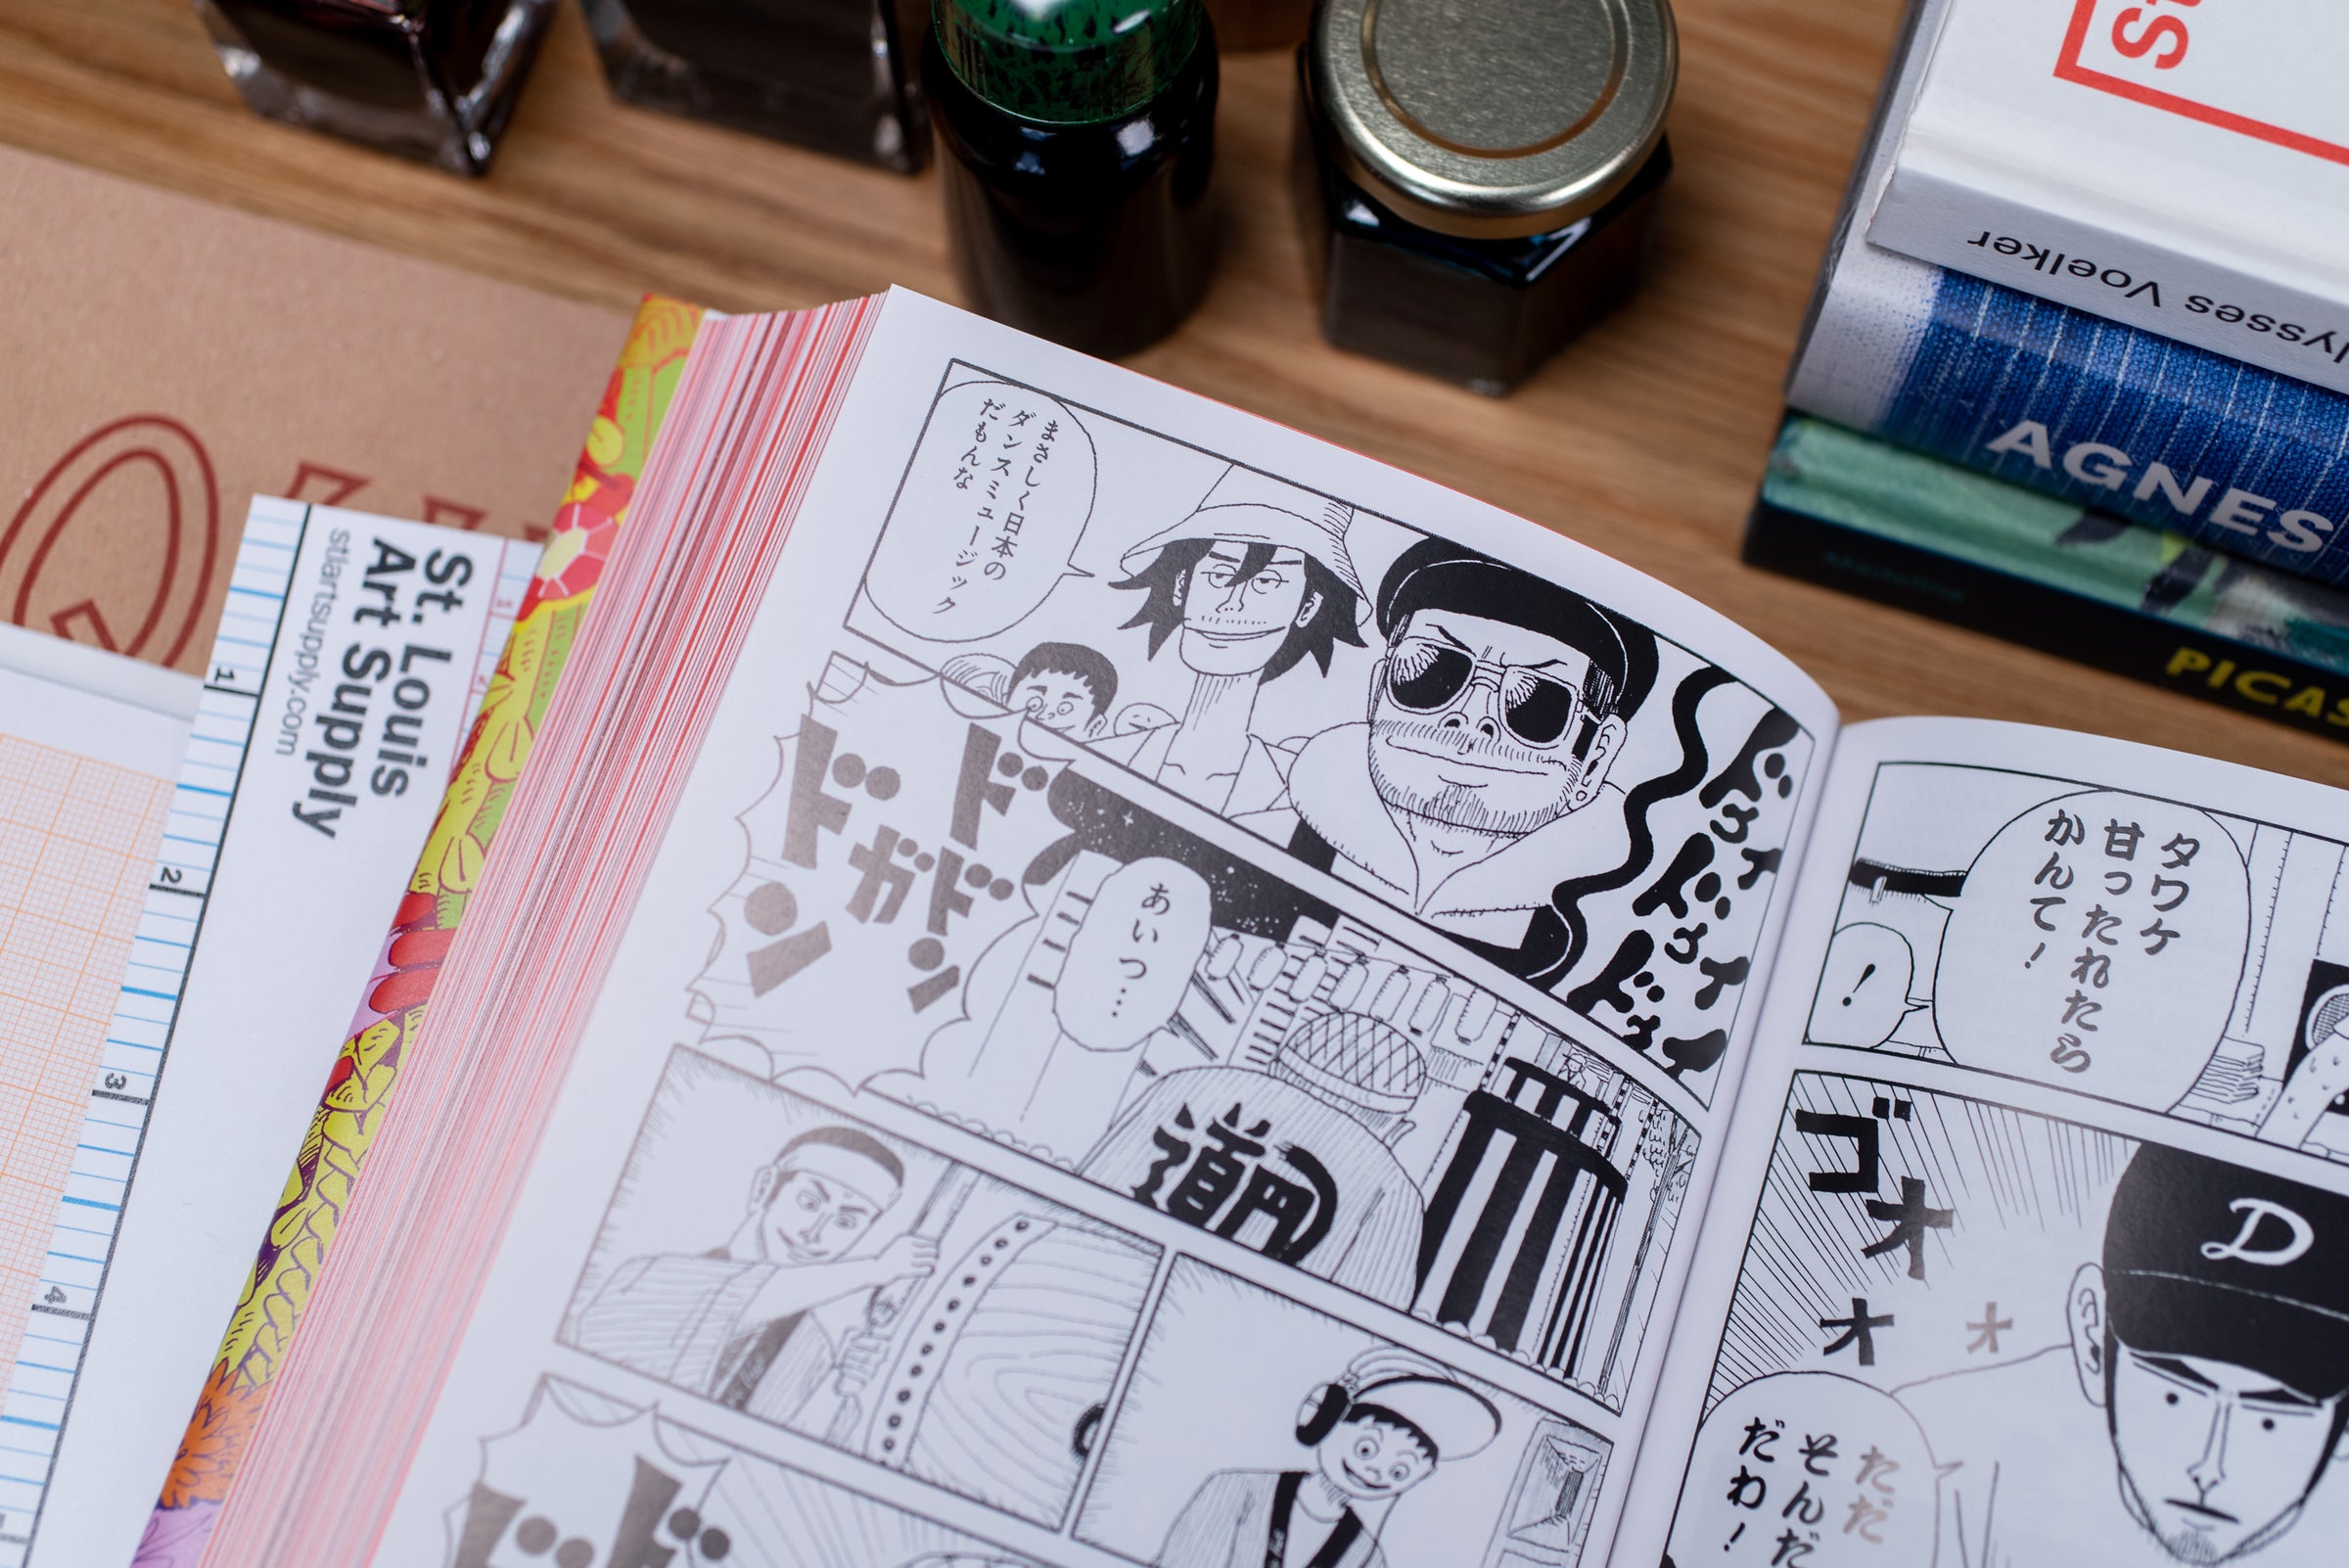 Illustration & Manga, Art Supplies